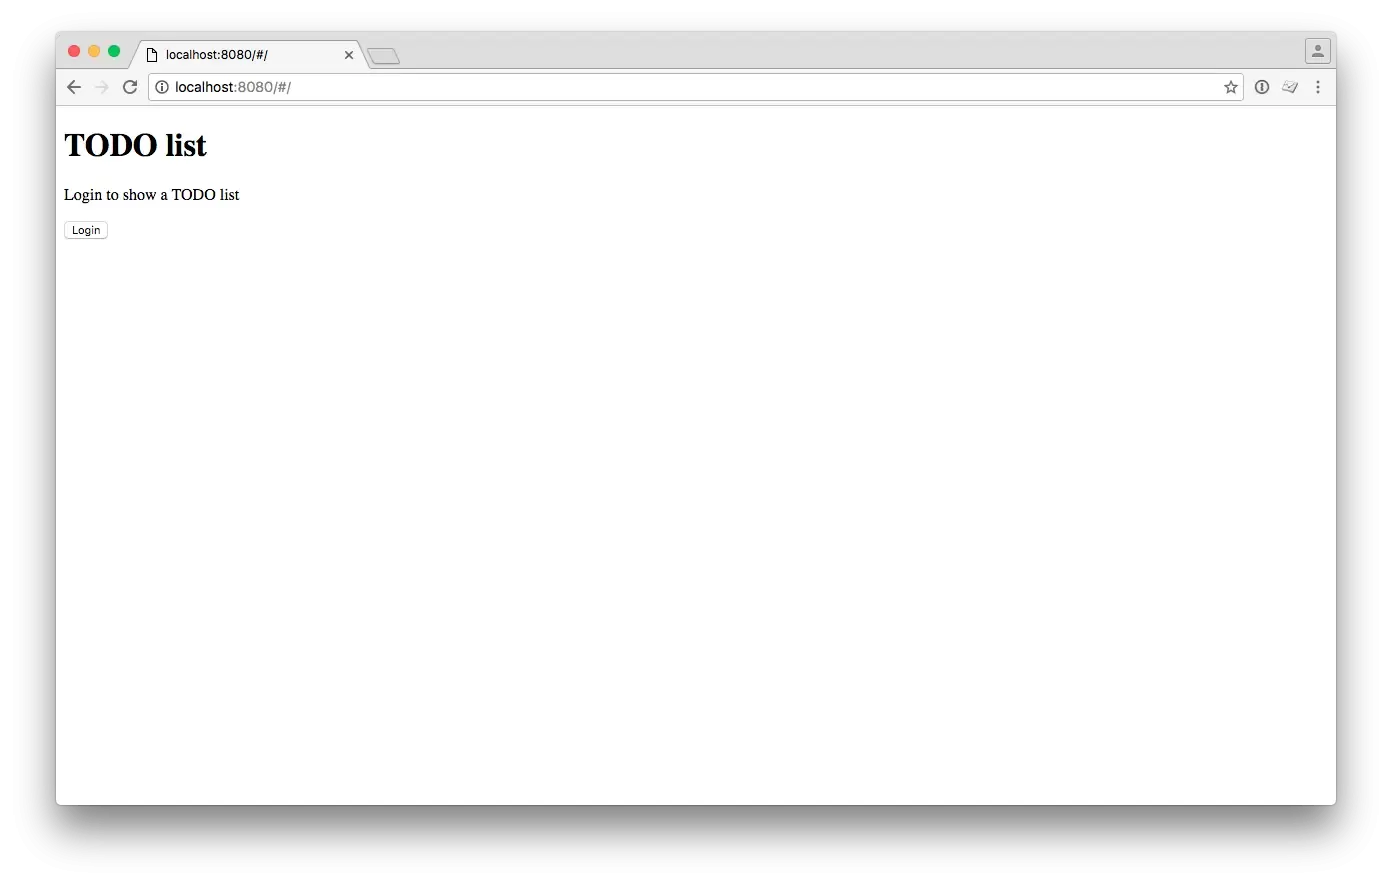 A default website with a login button